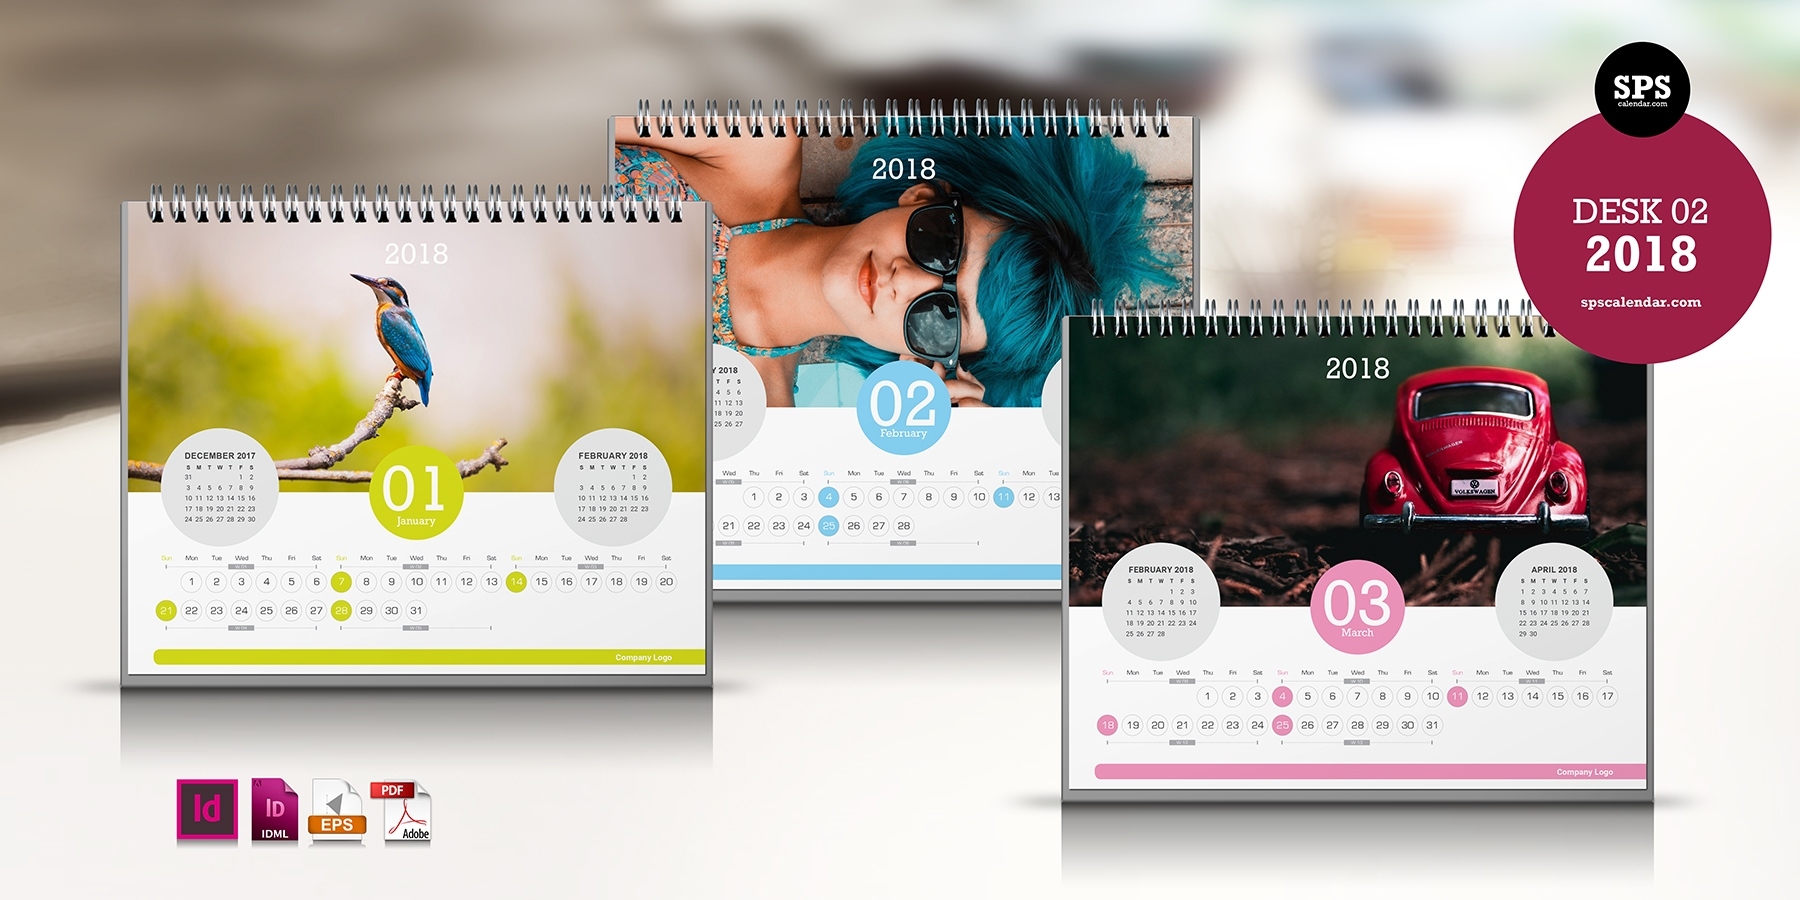 Free 2018 Indesign Calendar Template - Spscalendar Calendar Template Indesign Free